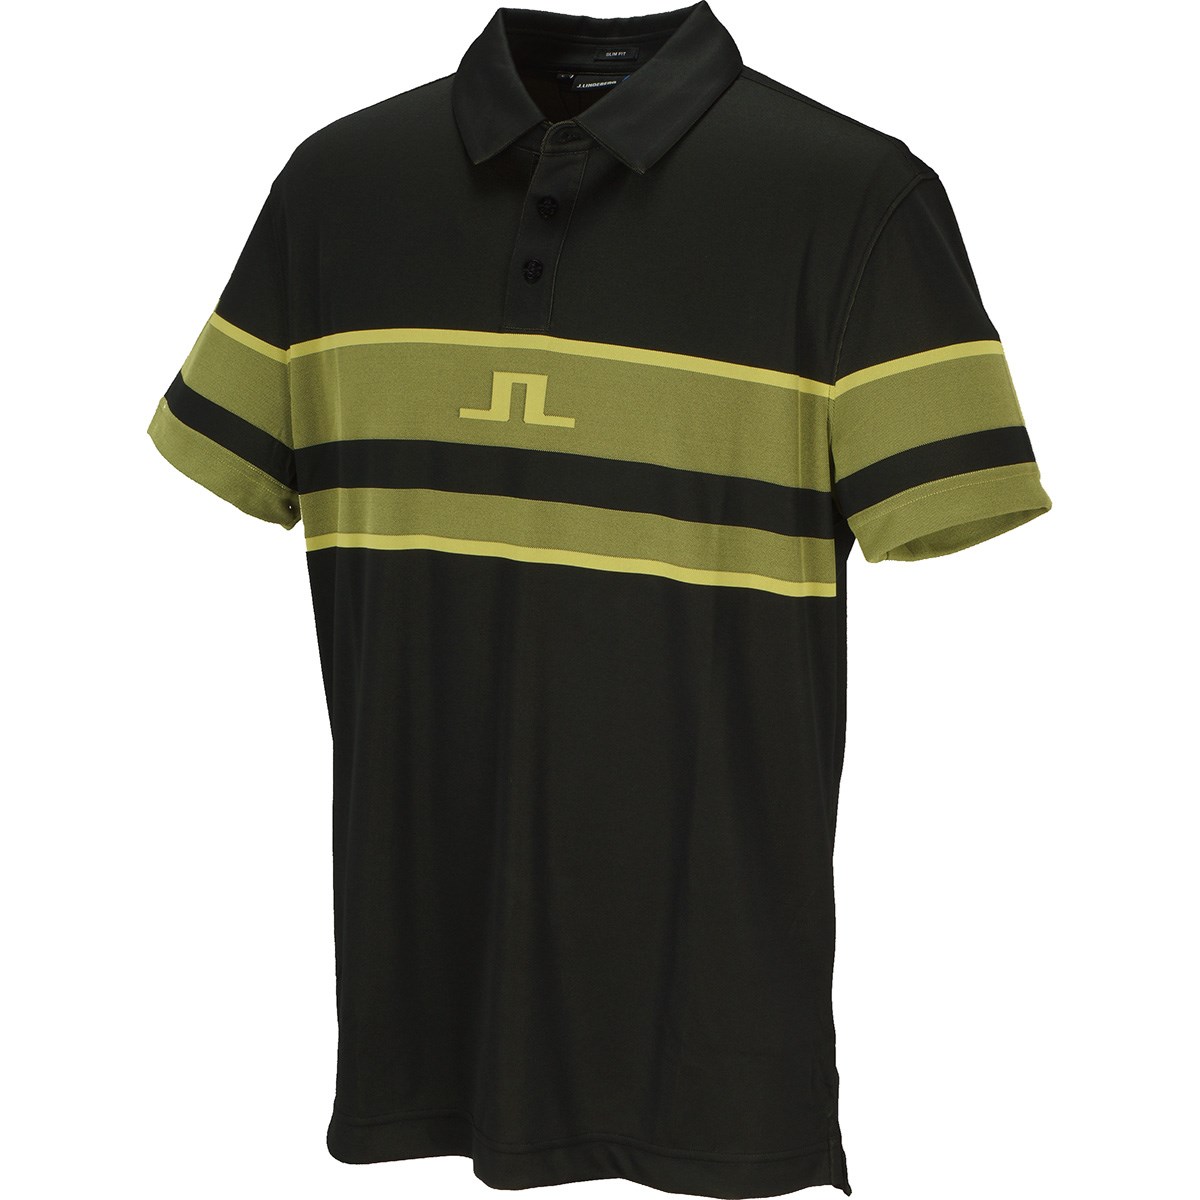 J.リンドバーグ TX ジャガード 半袖ポロシャツ 